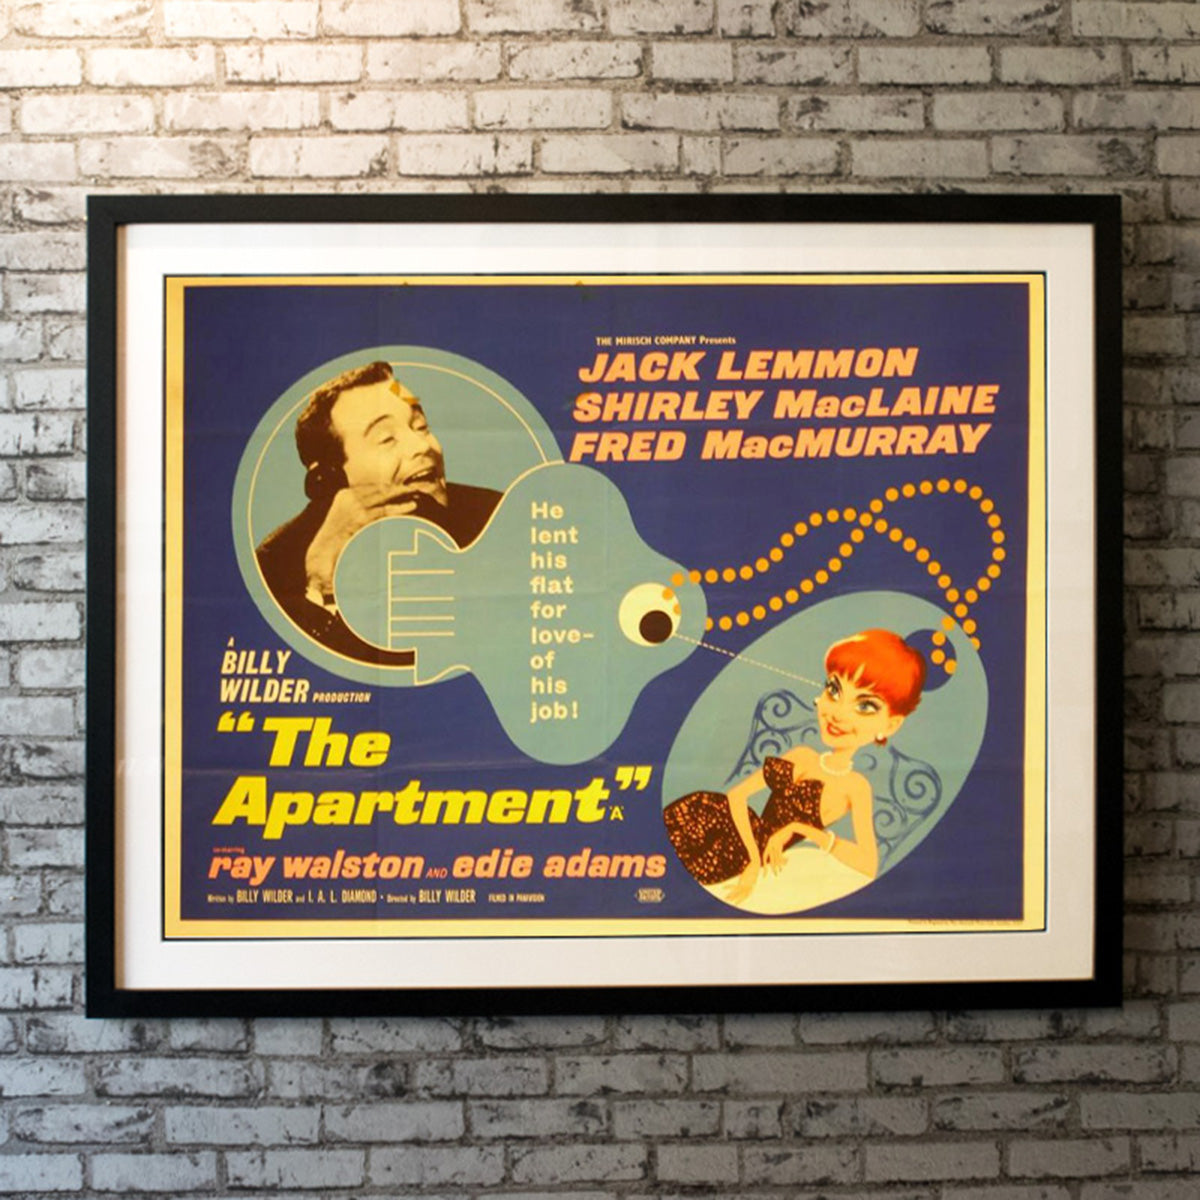 Original Movie Poster of Apartment, The (1960)